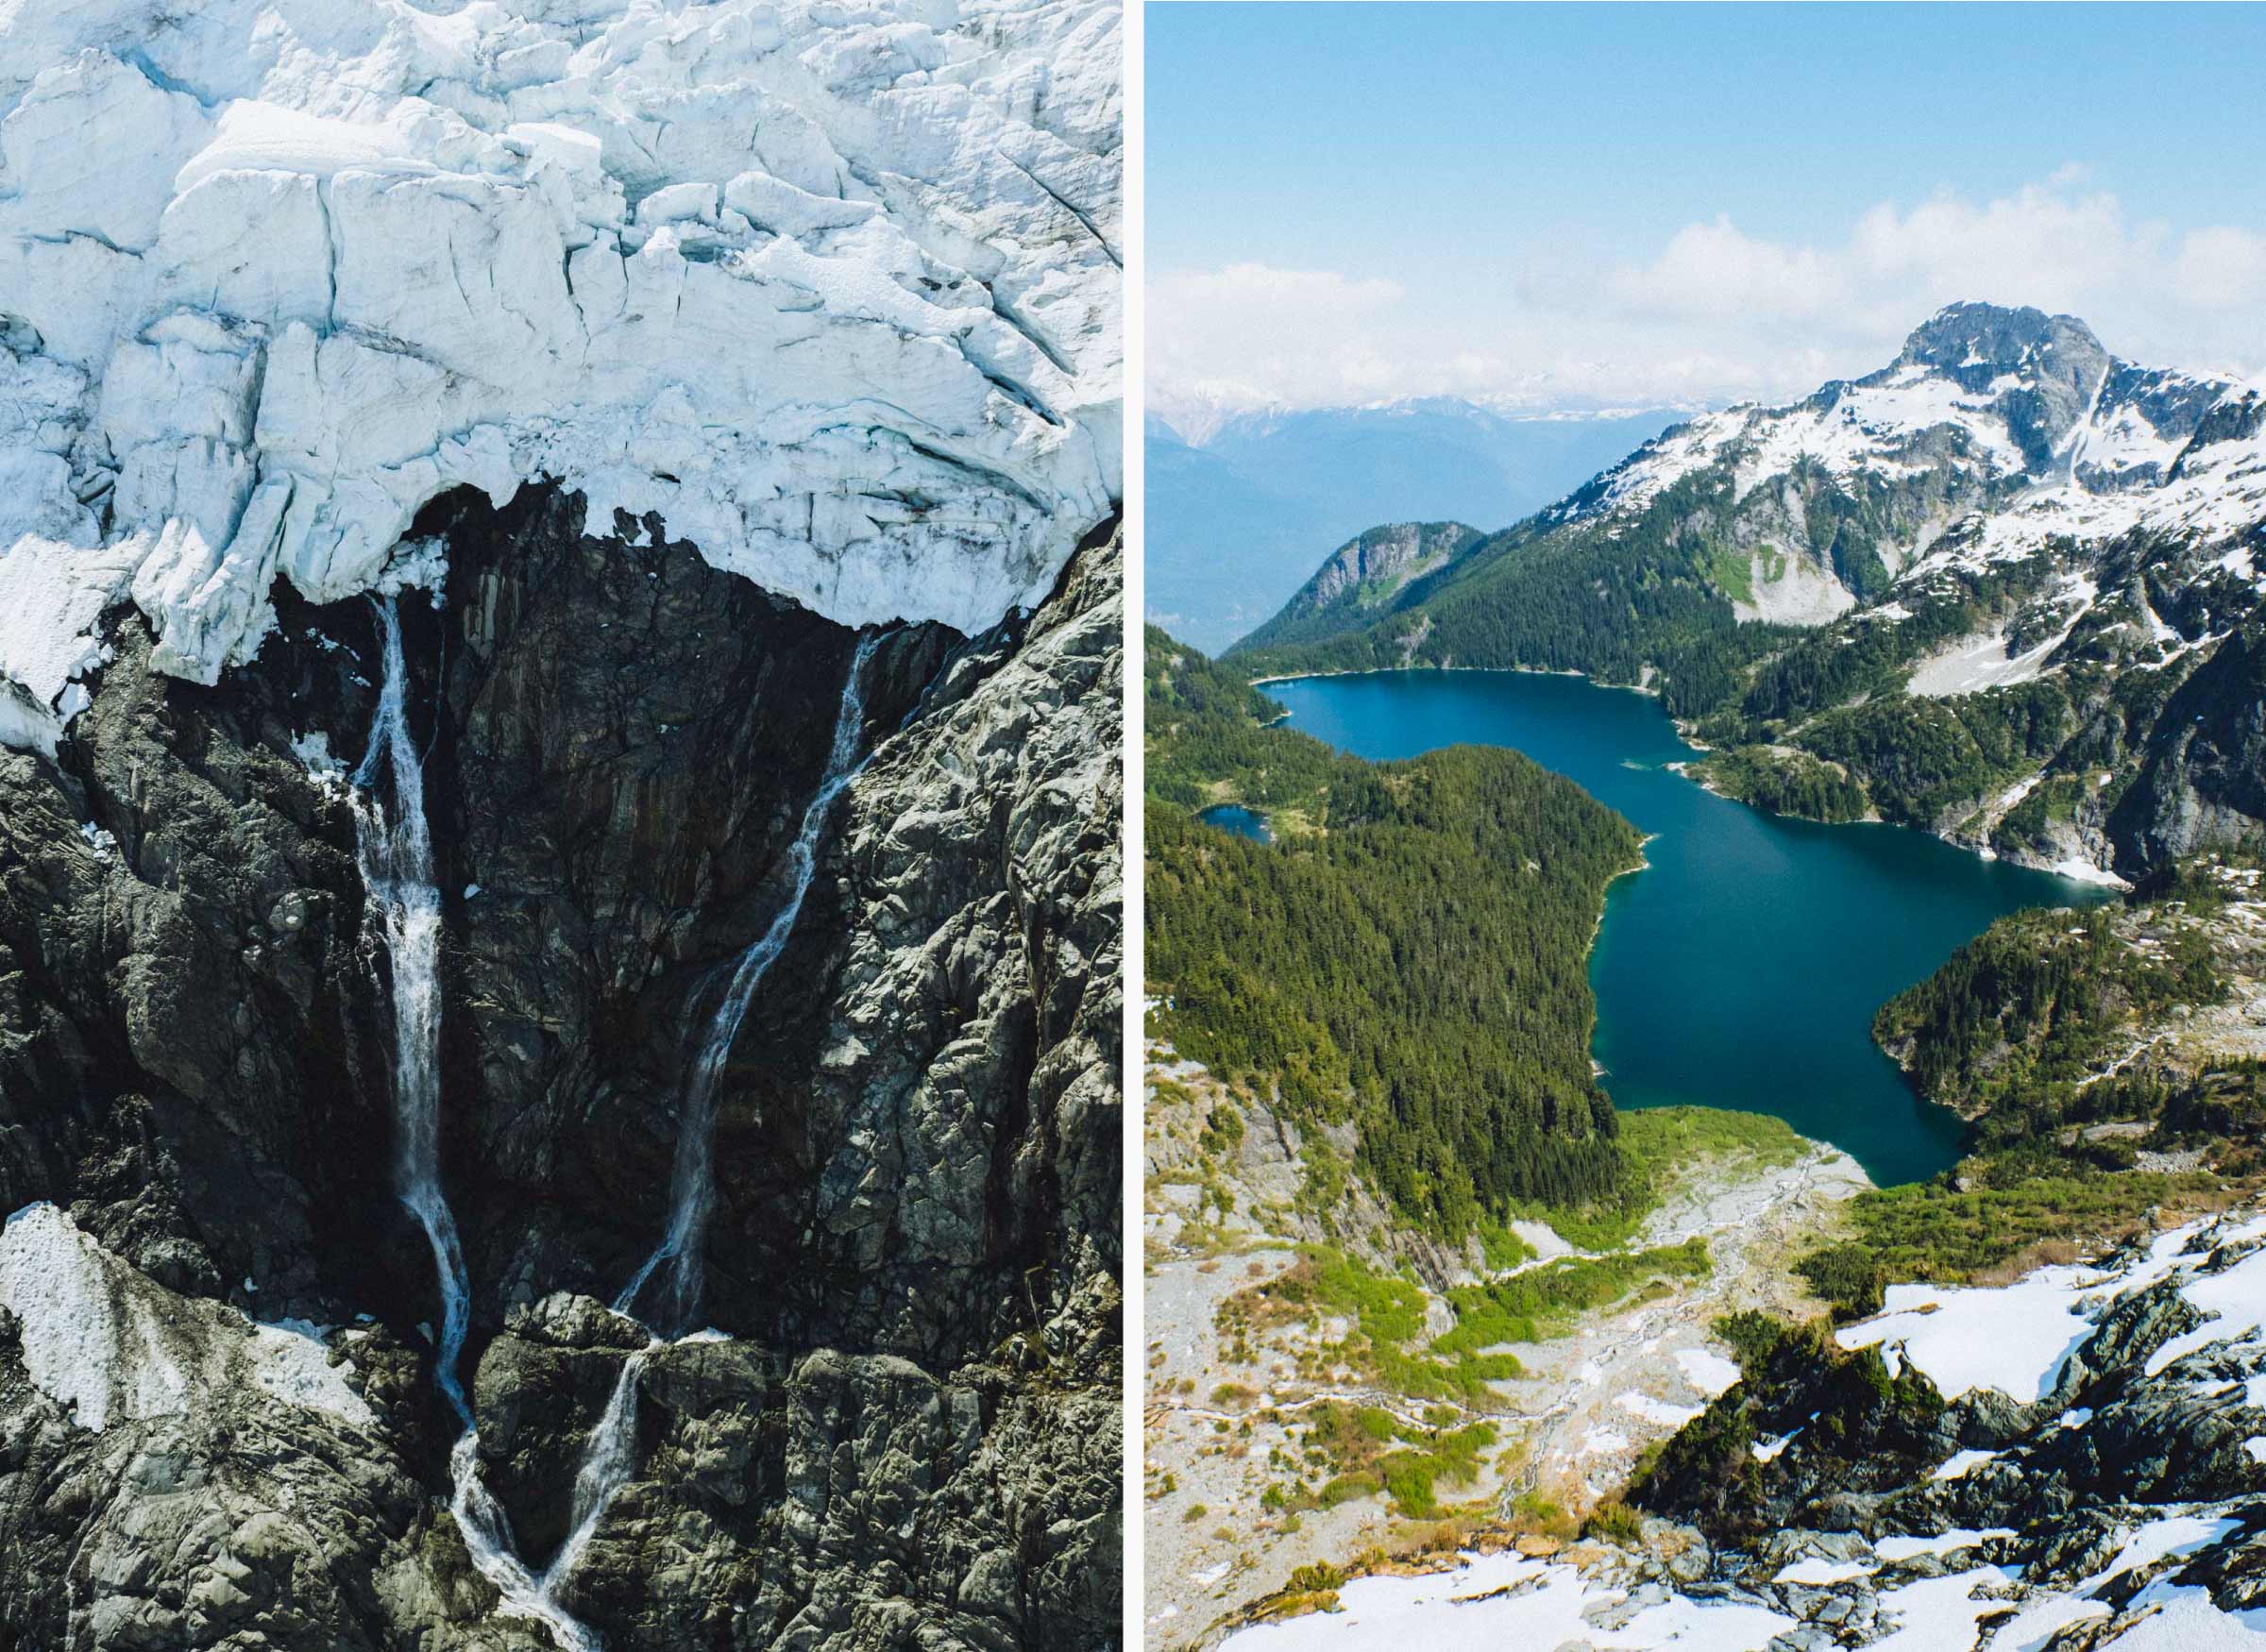 Glacier melt feeding the lake